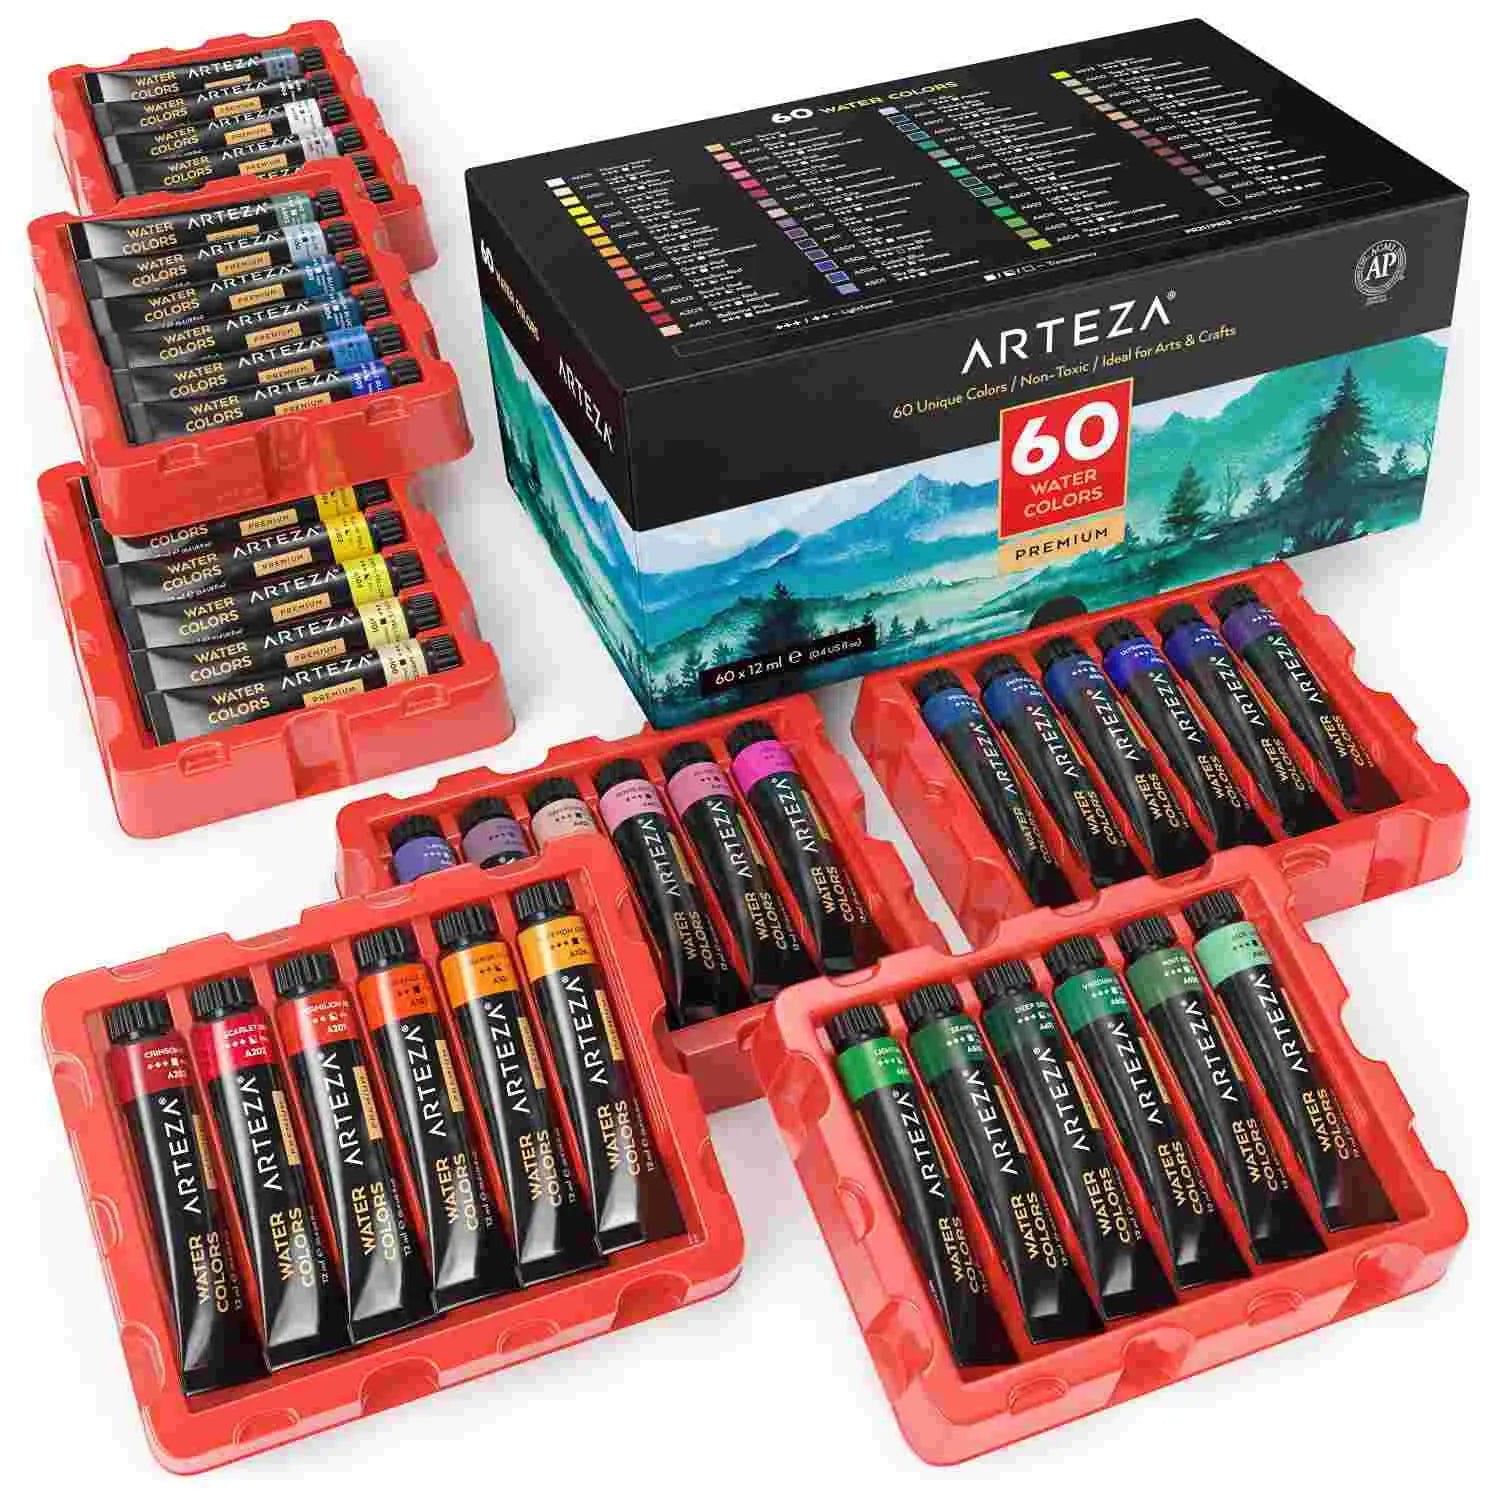 ARTEZA Watercolor Paint Set, 60 Colors in 12 ml Tubes, Premium Non Toxic Water Colors Paint for Adults, Artists & Hobby Painters, Bright Vibrant Watercolor Paints Arteza